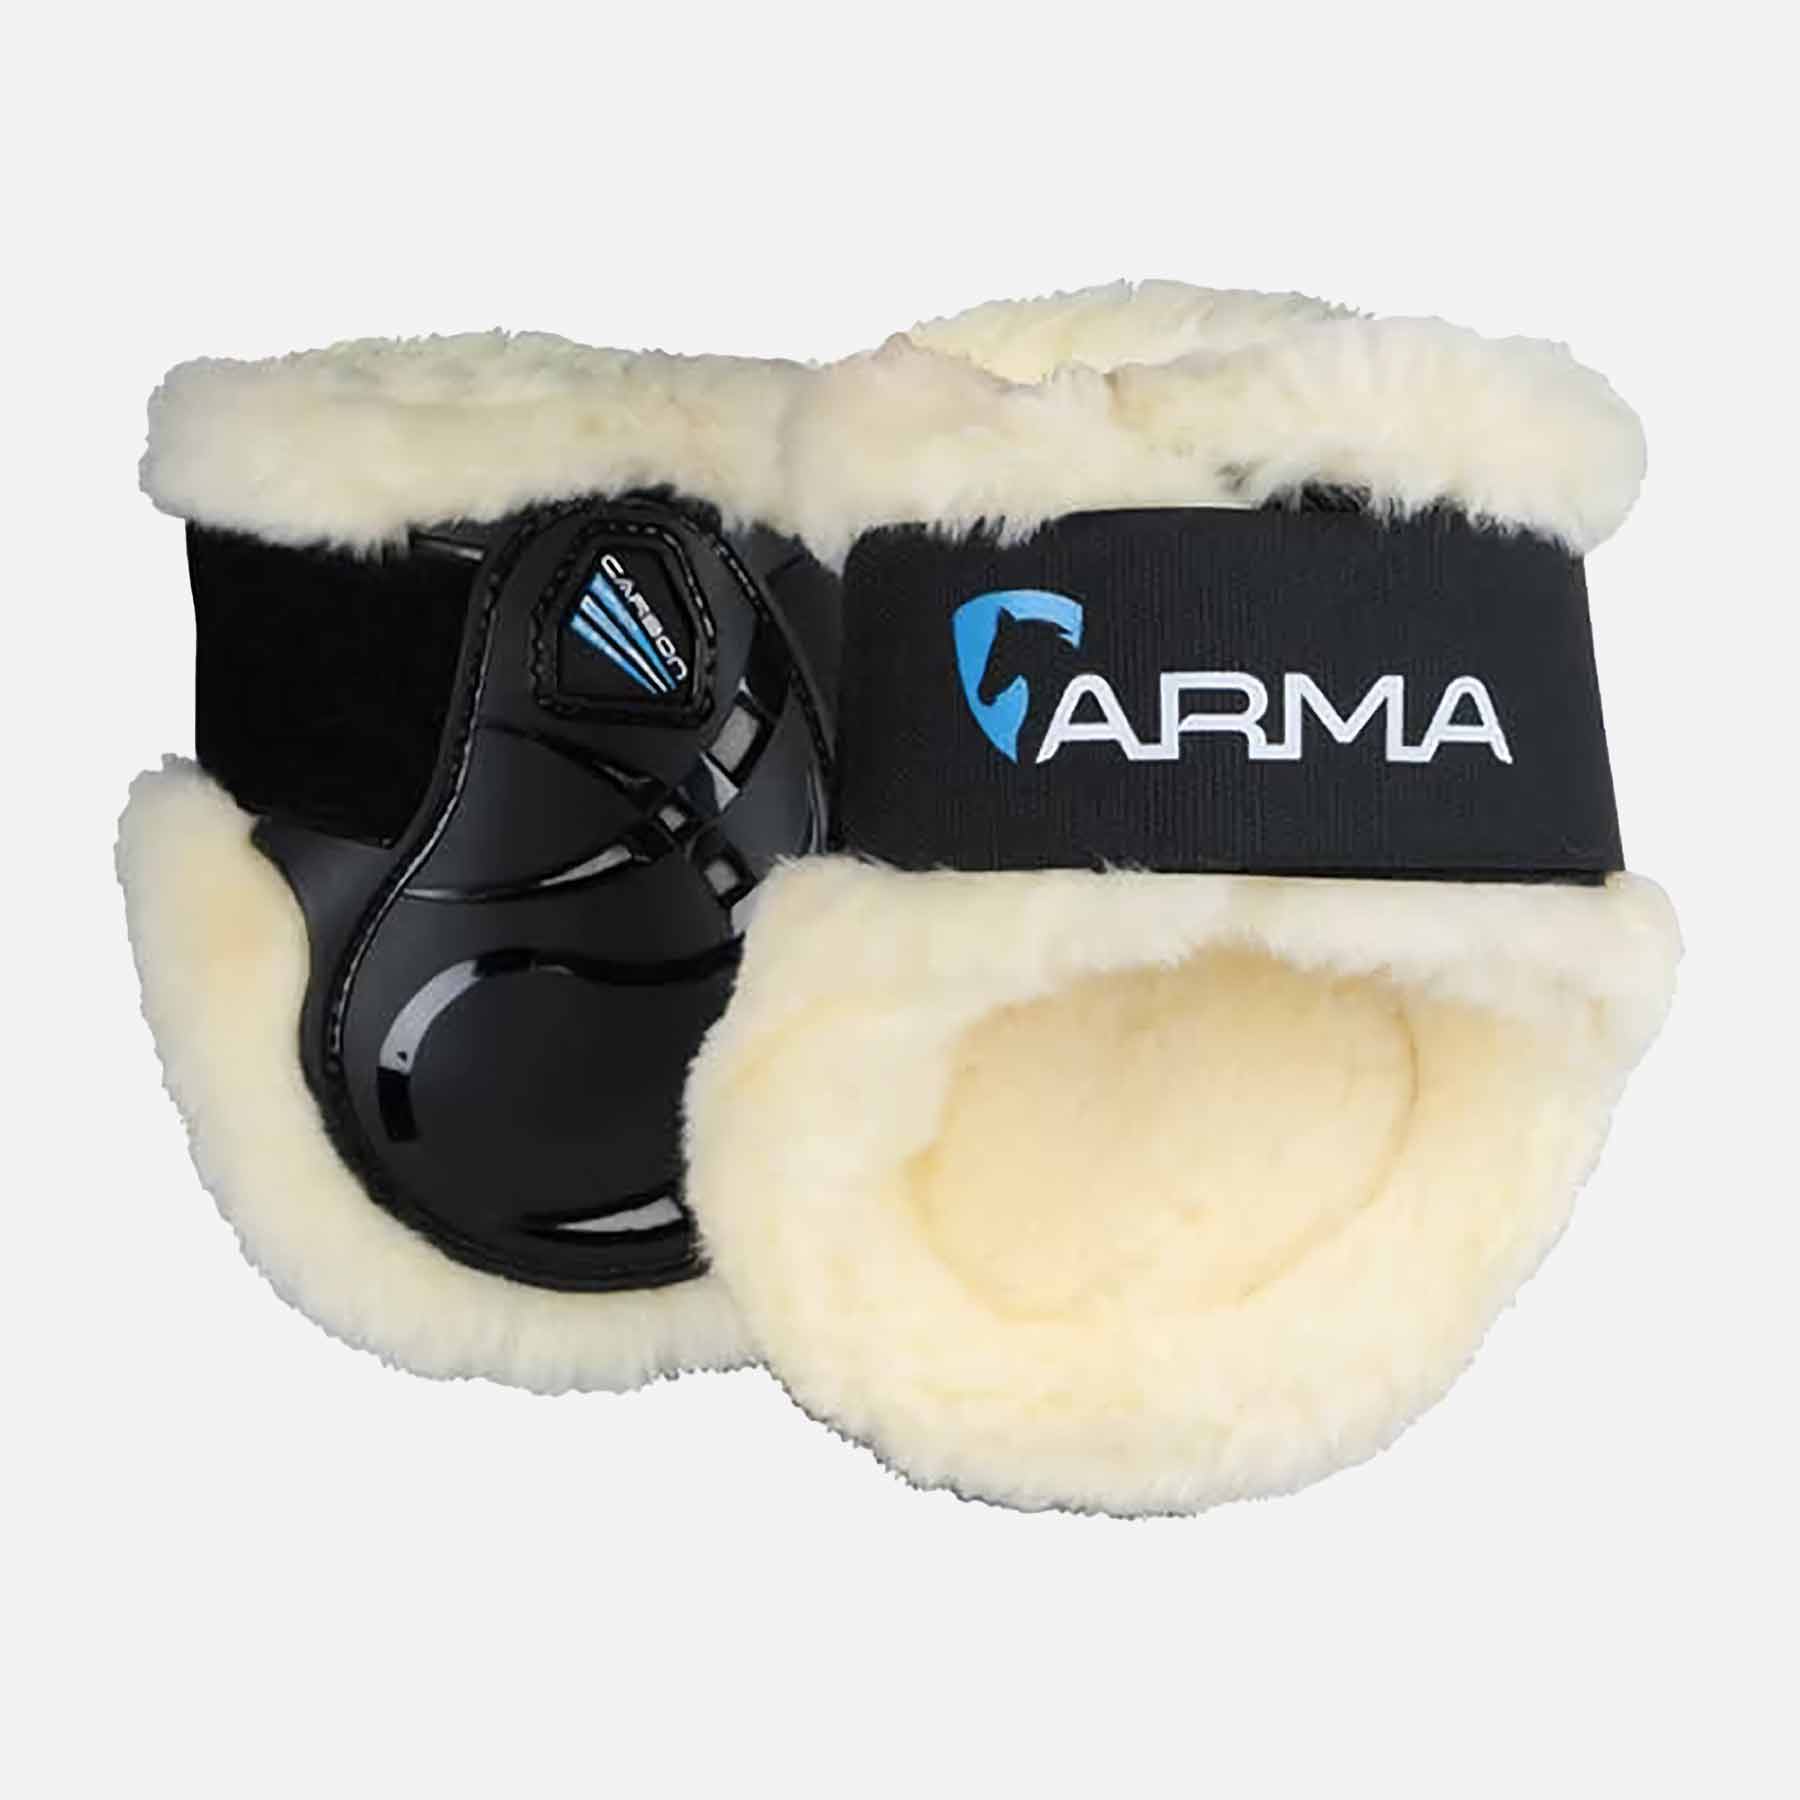 ARMA Carbon SupaFleece Fetlock Boots